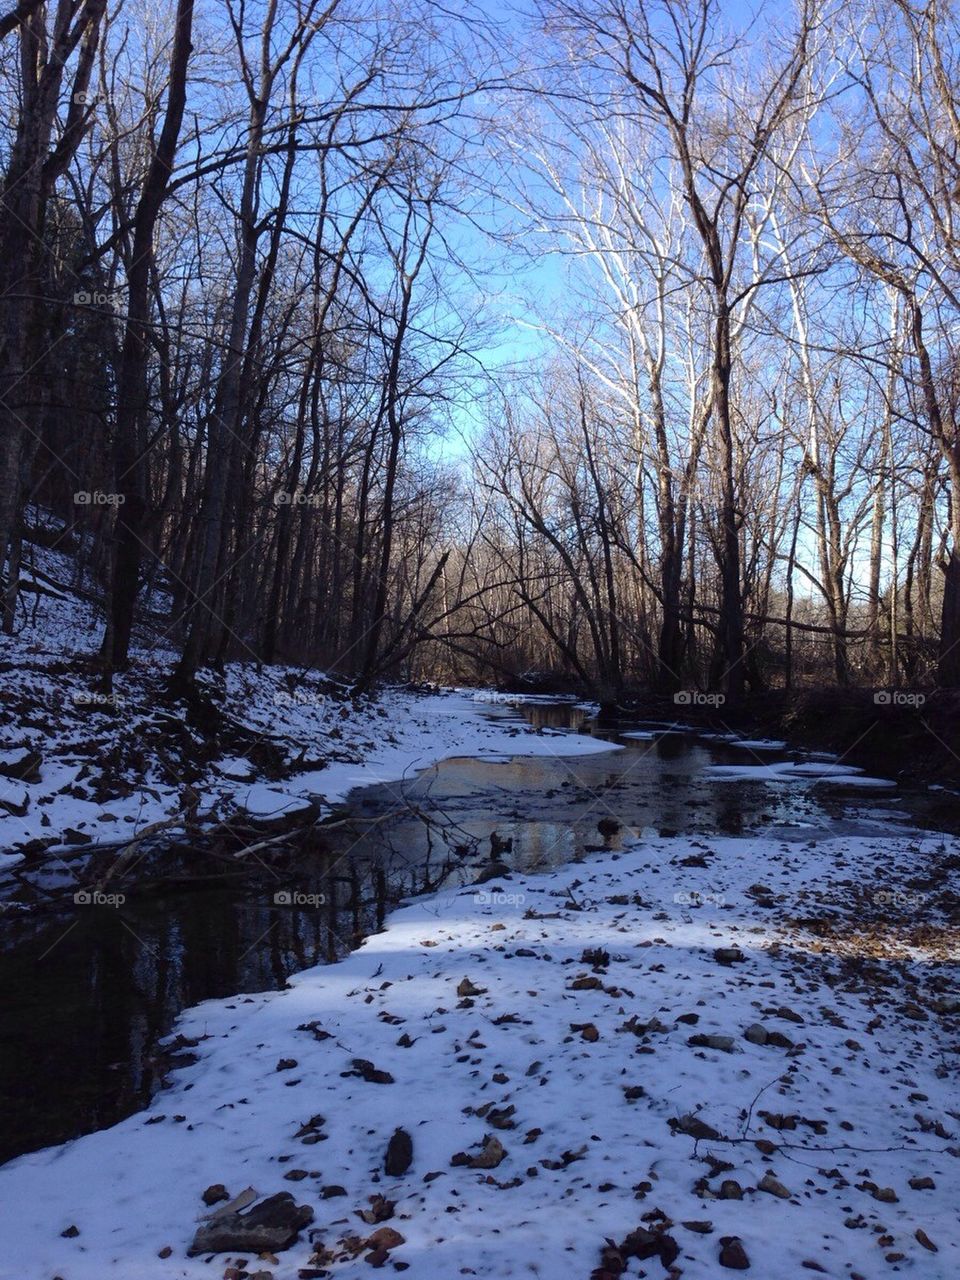 Creek in winter snow